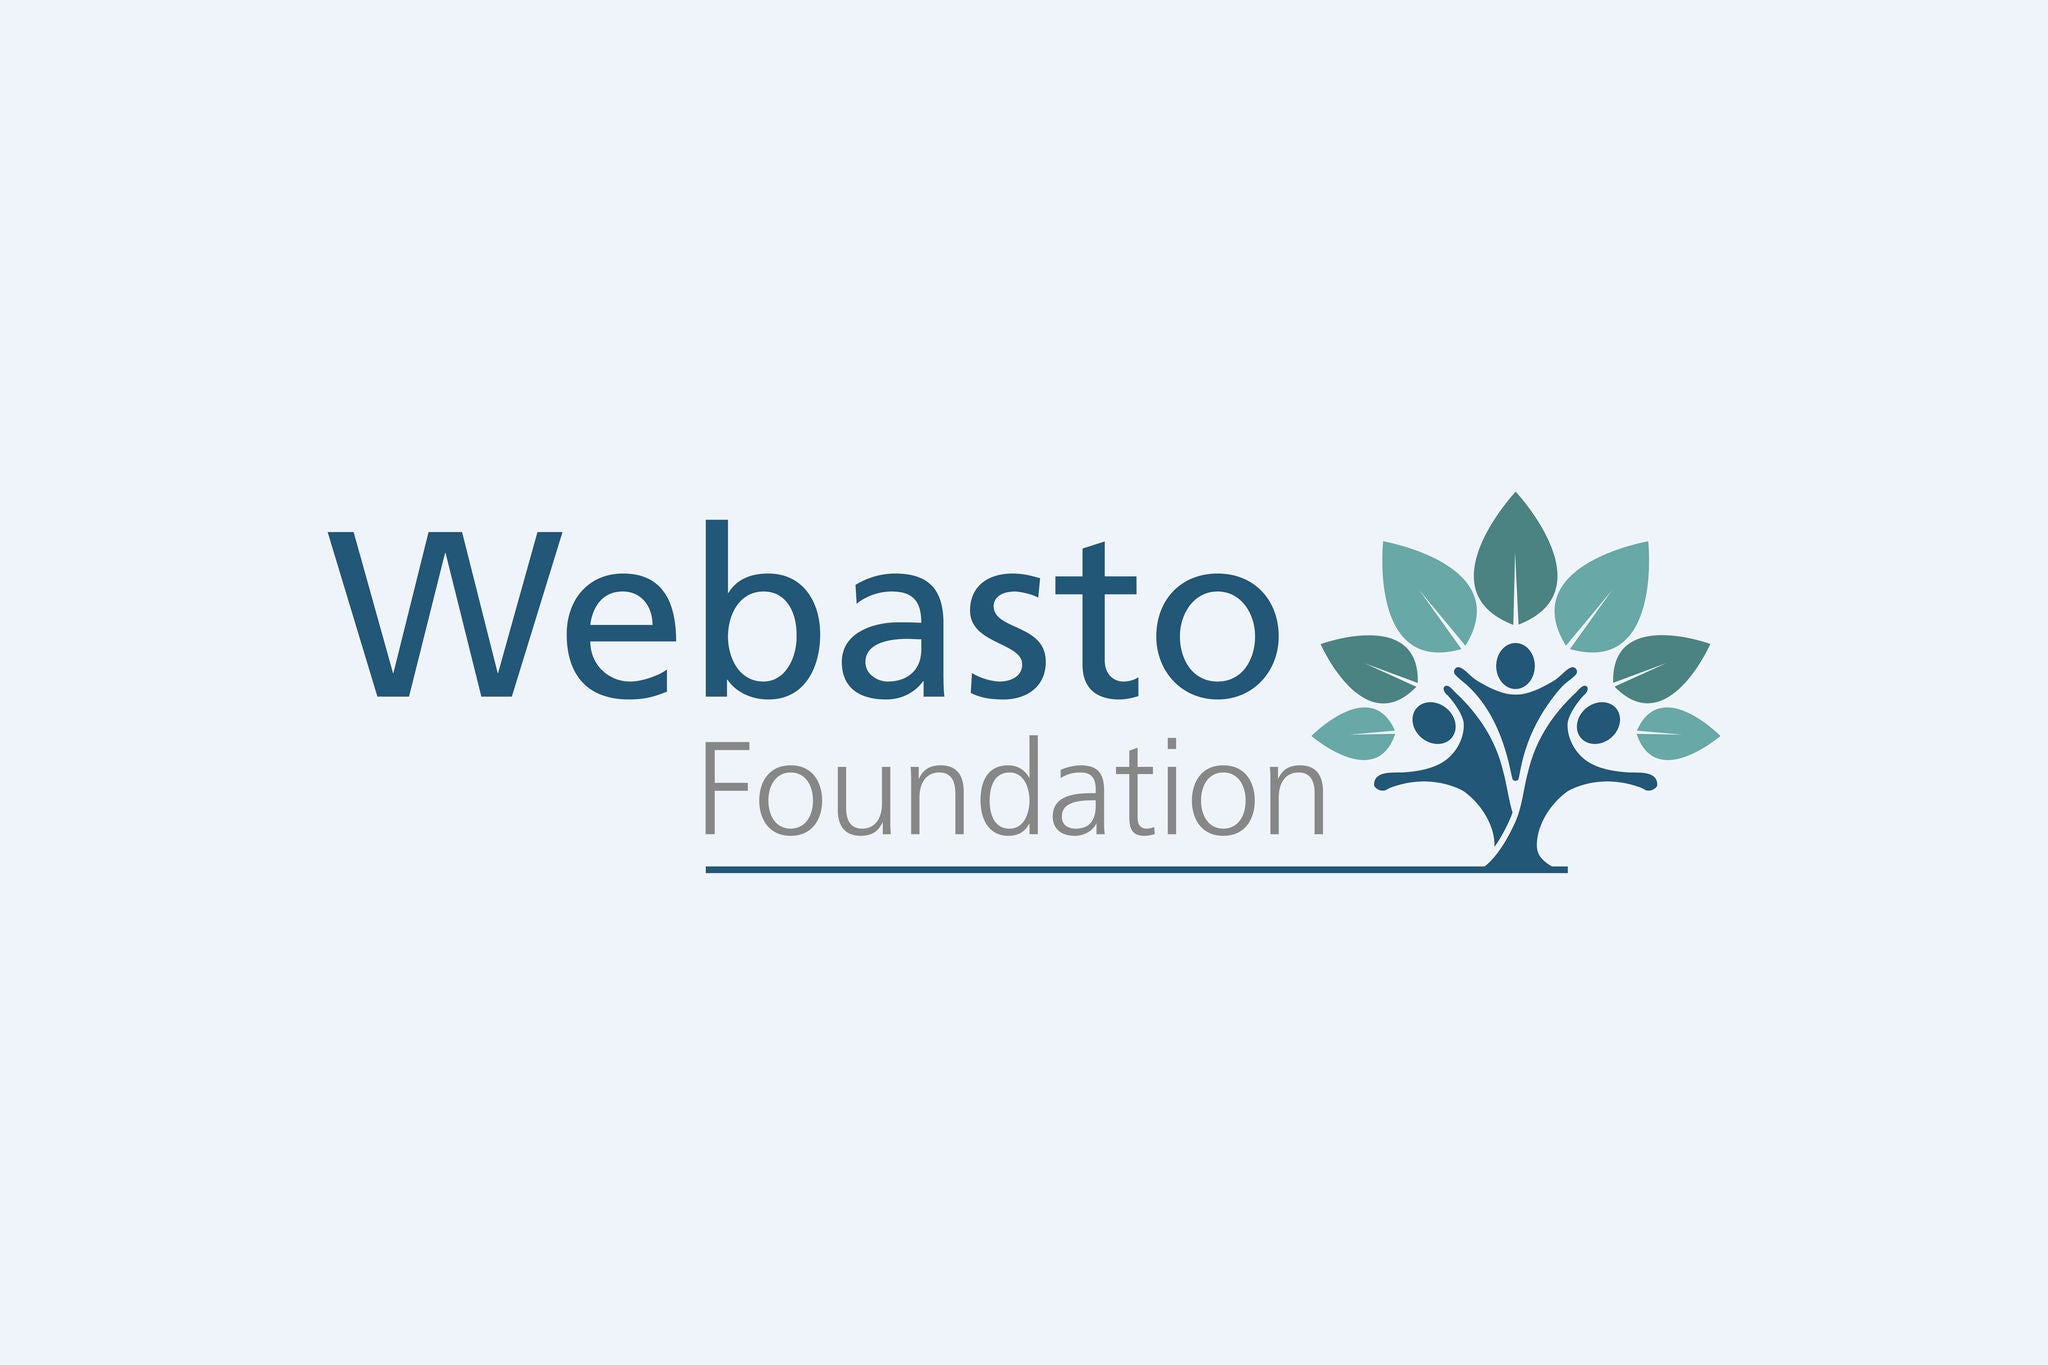 Webasto Foundation Overview